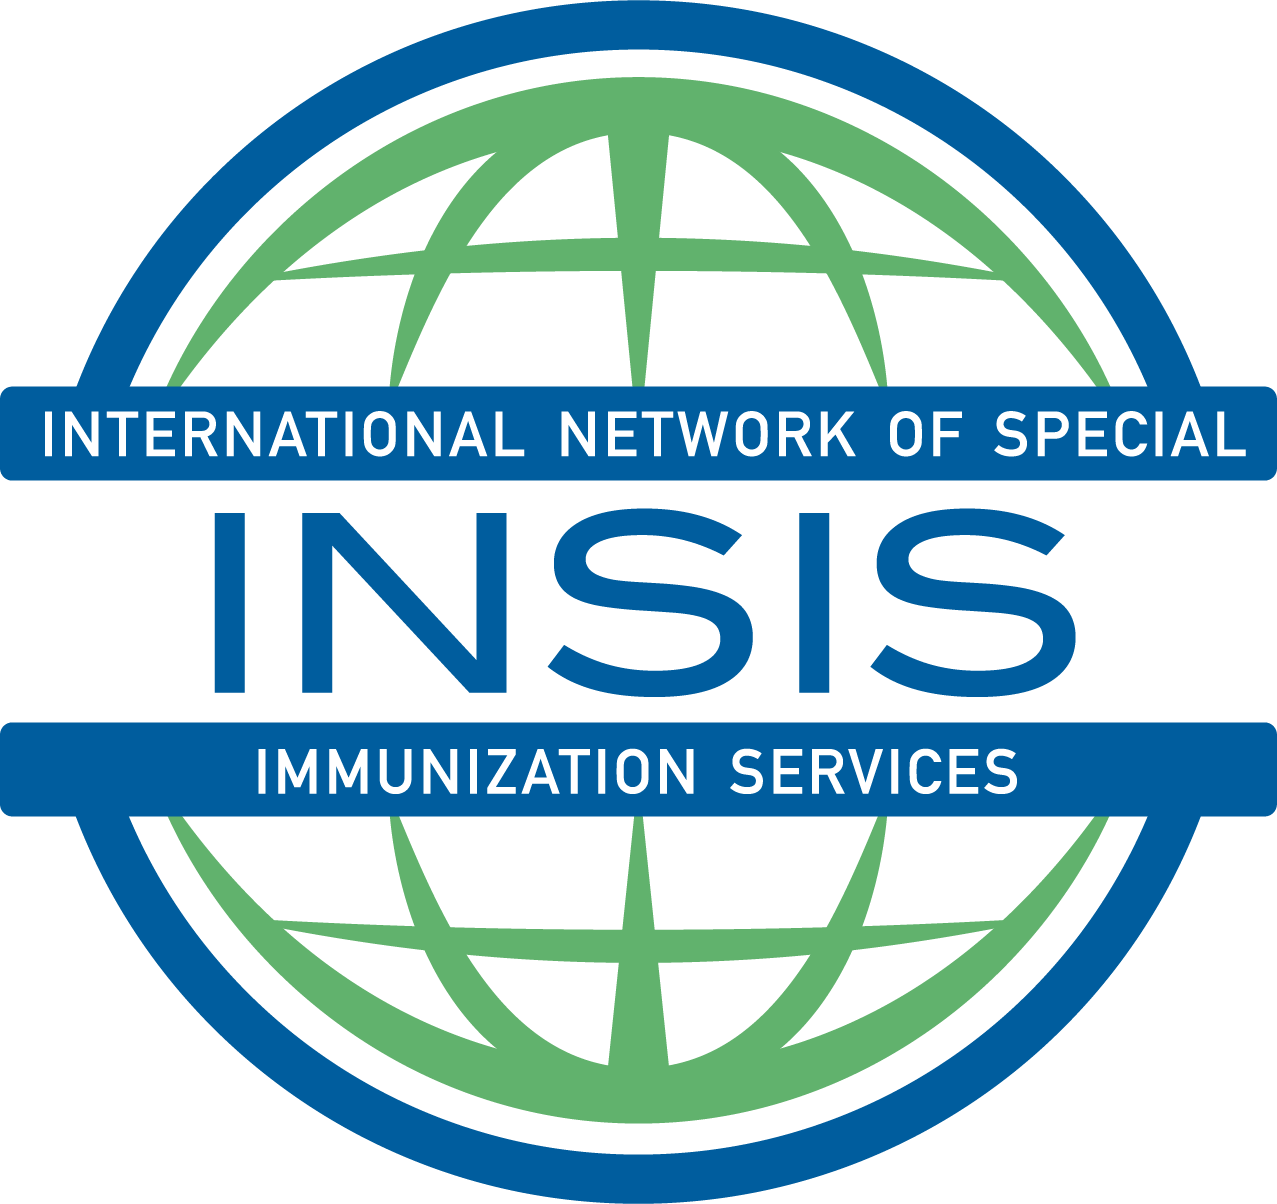 International Network of Special Immunization Services